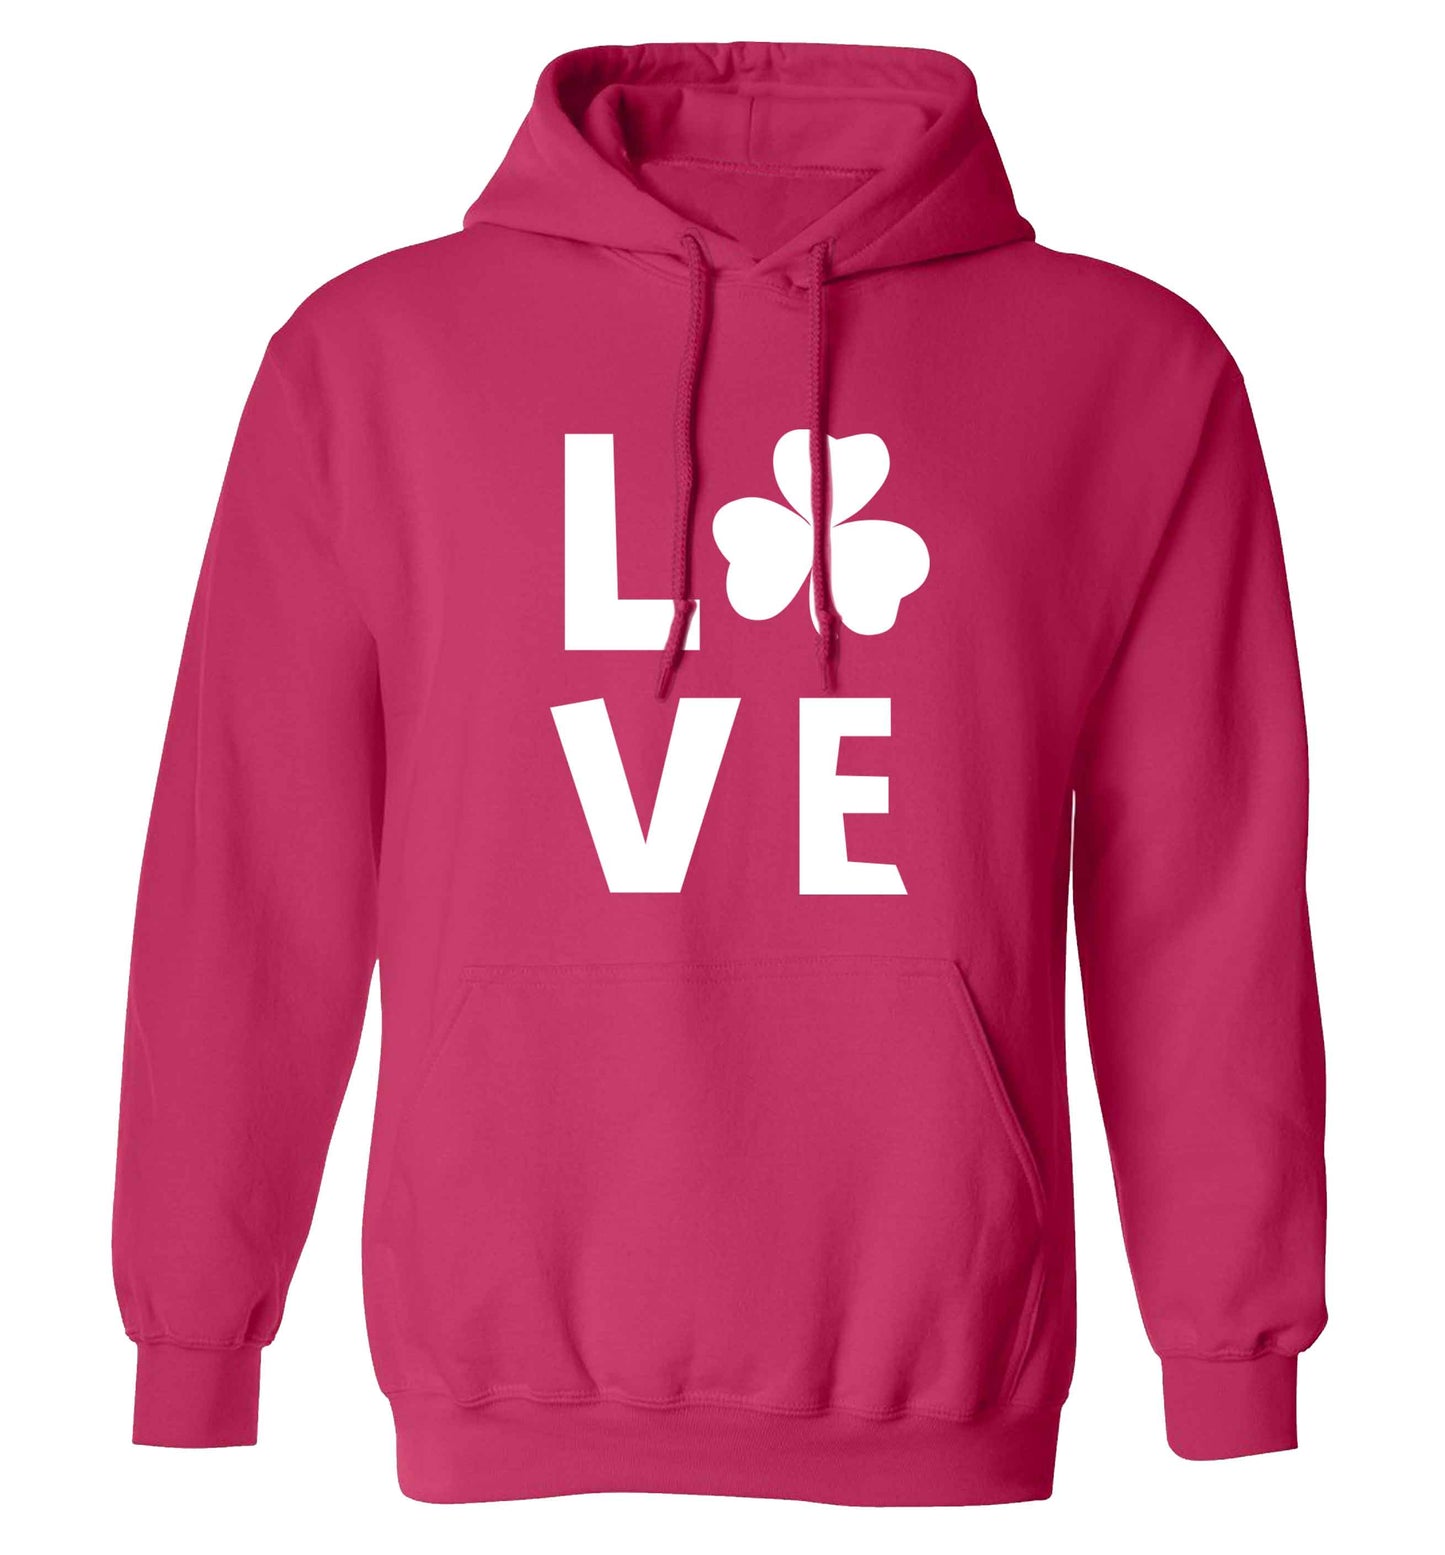 Shamrock love adults unisex pink hoodie 2XL